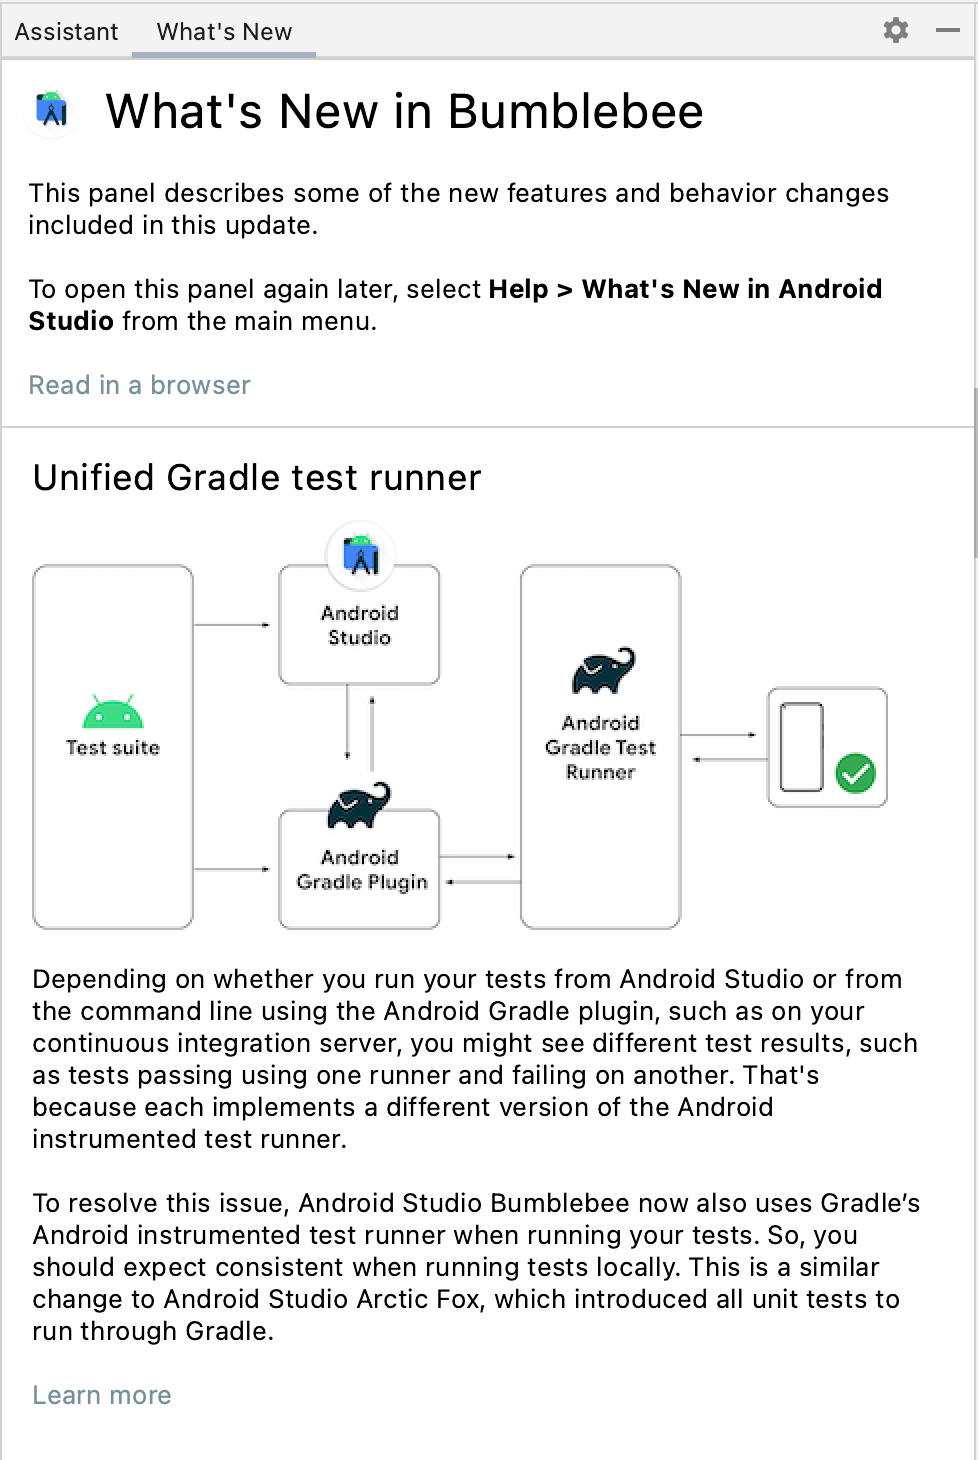 這張圖片顯示「What's New」窗格，其中提供有關 Android Studio 更新的相關資訊。